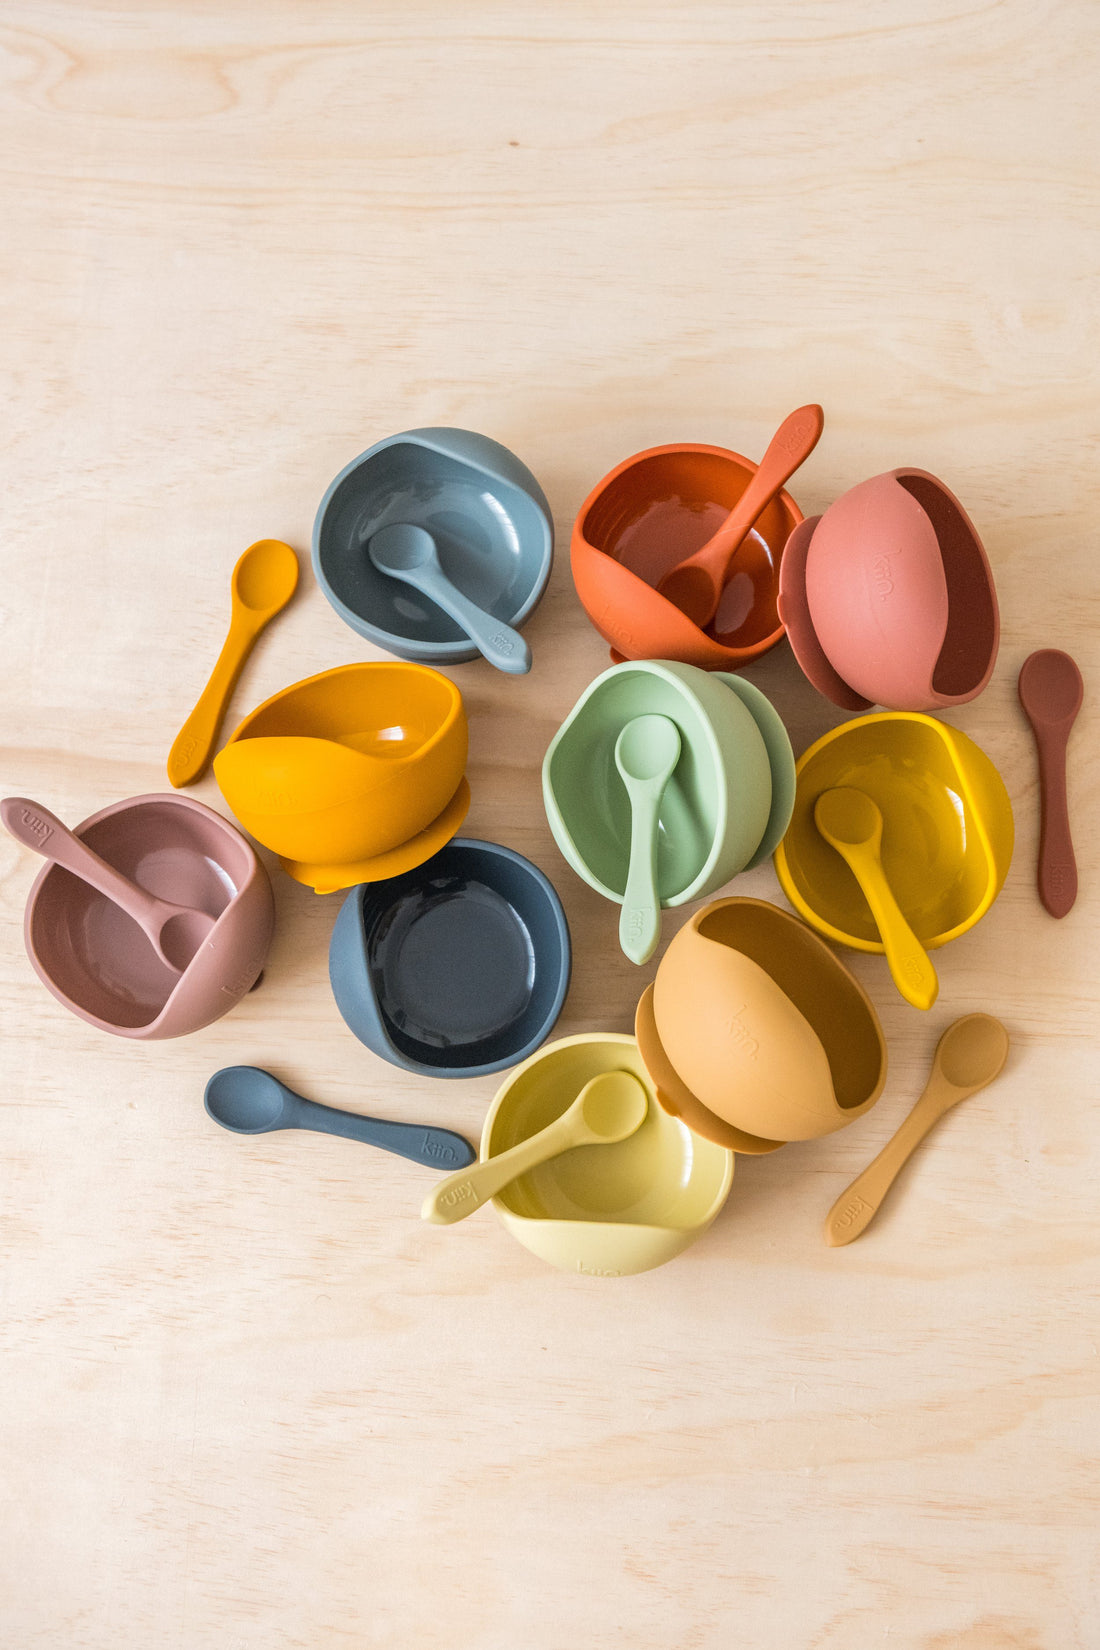 KIIN silicone bowls are not just any ordinary bowl